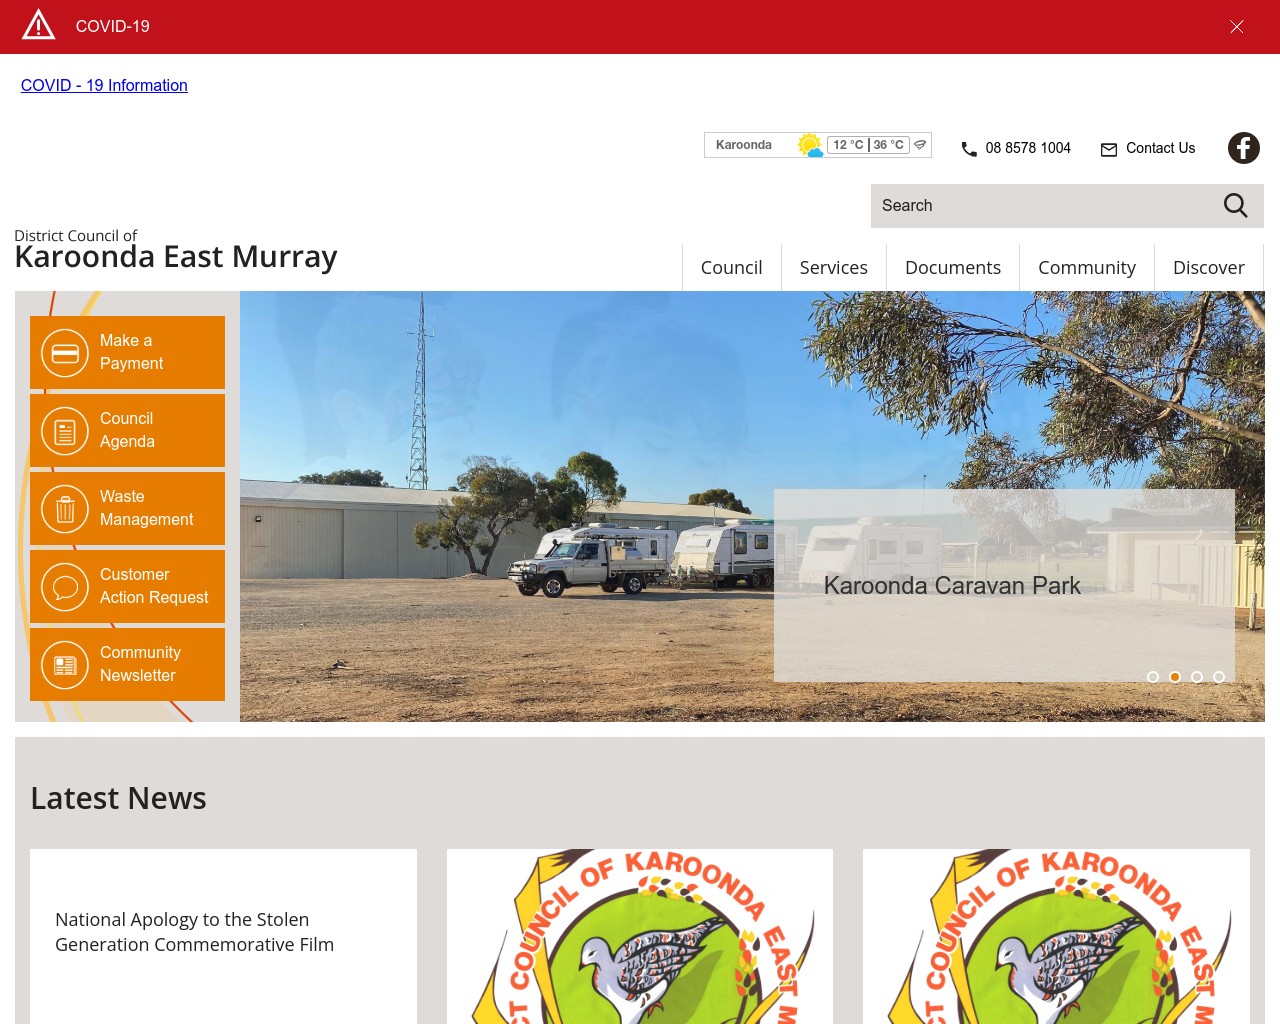 District Council of Karoonda East Murray